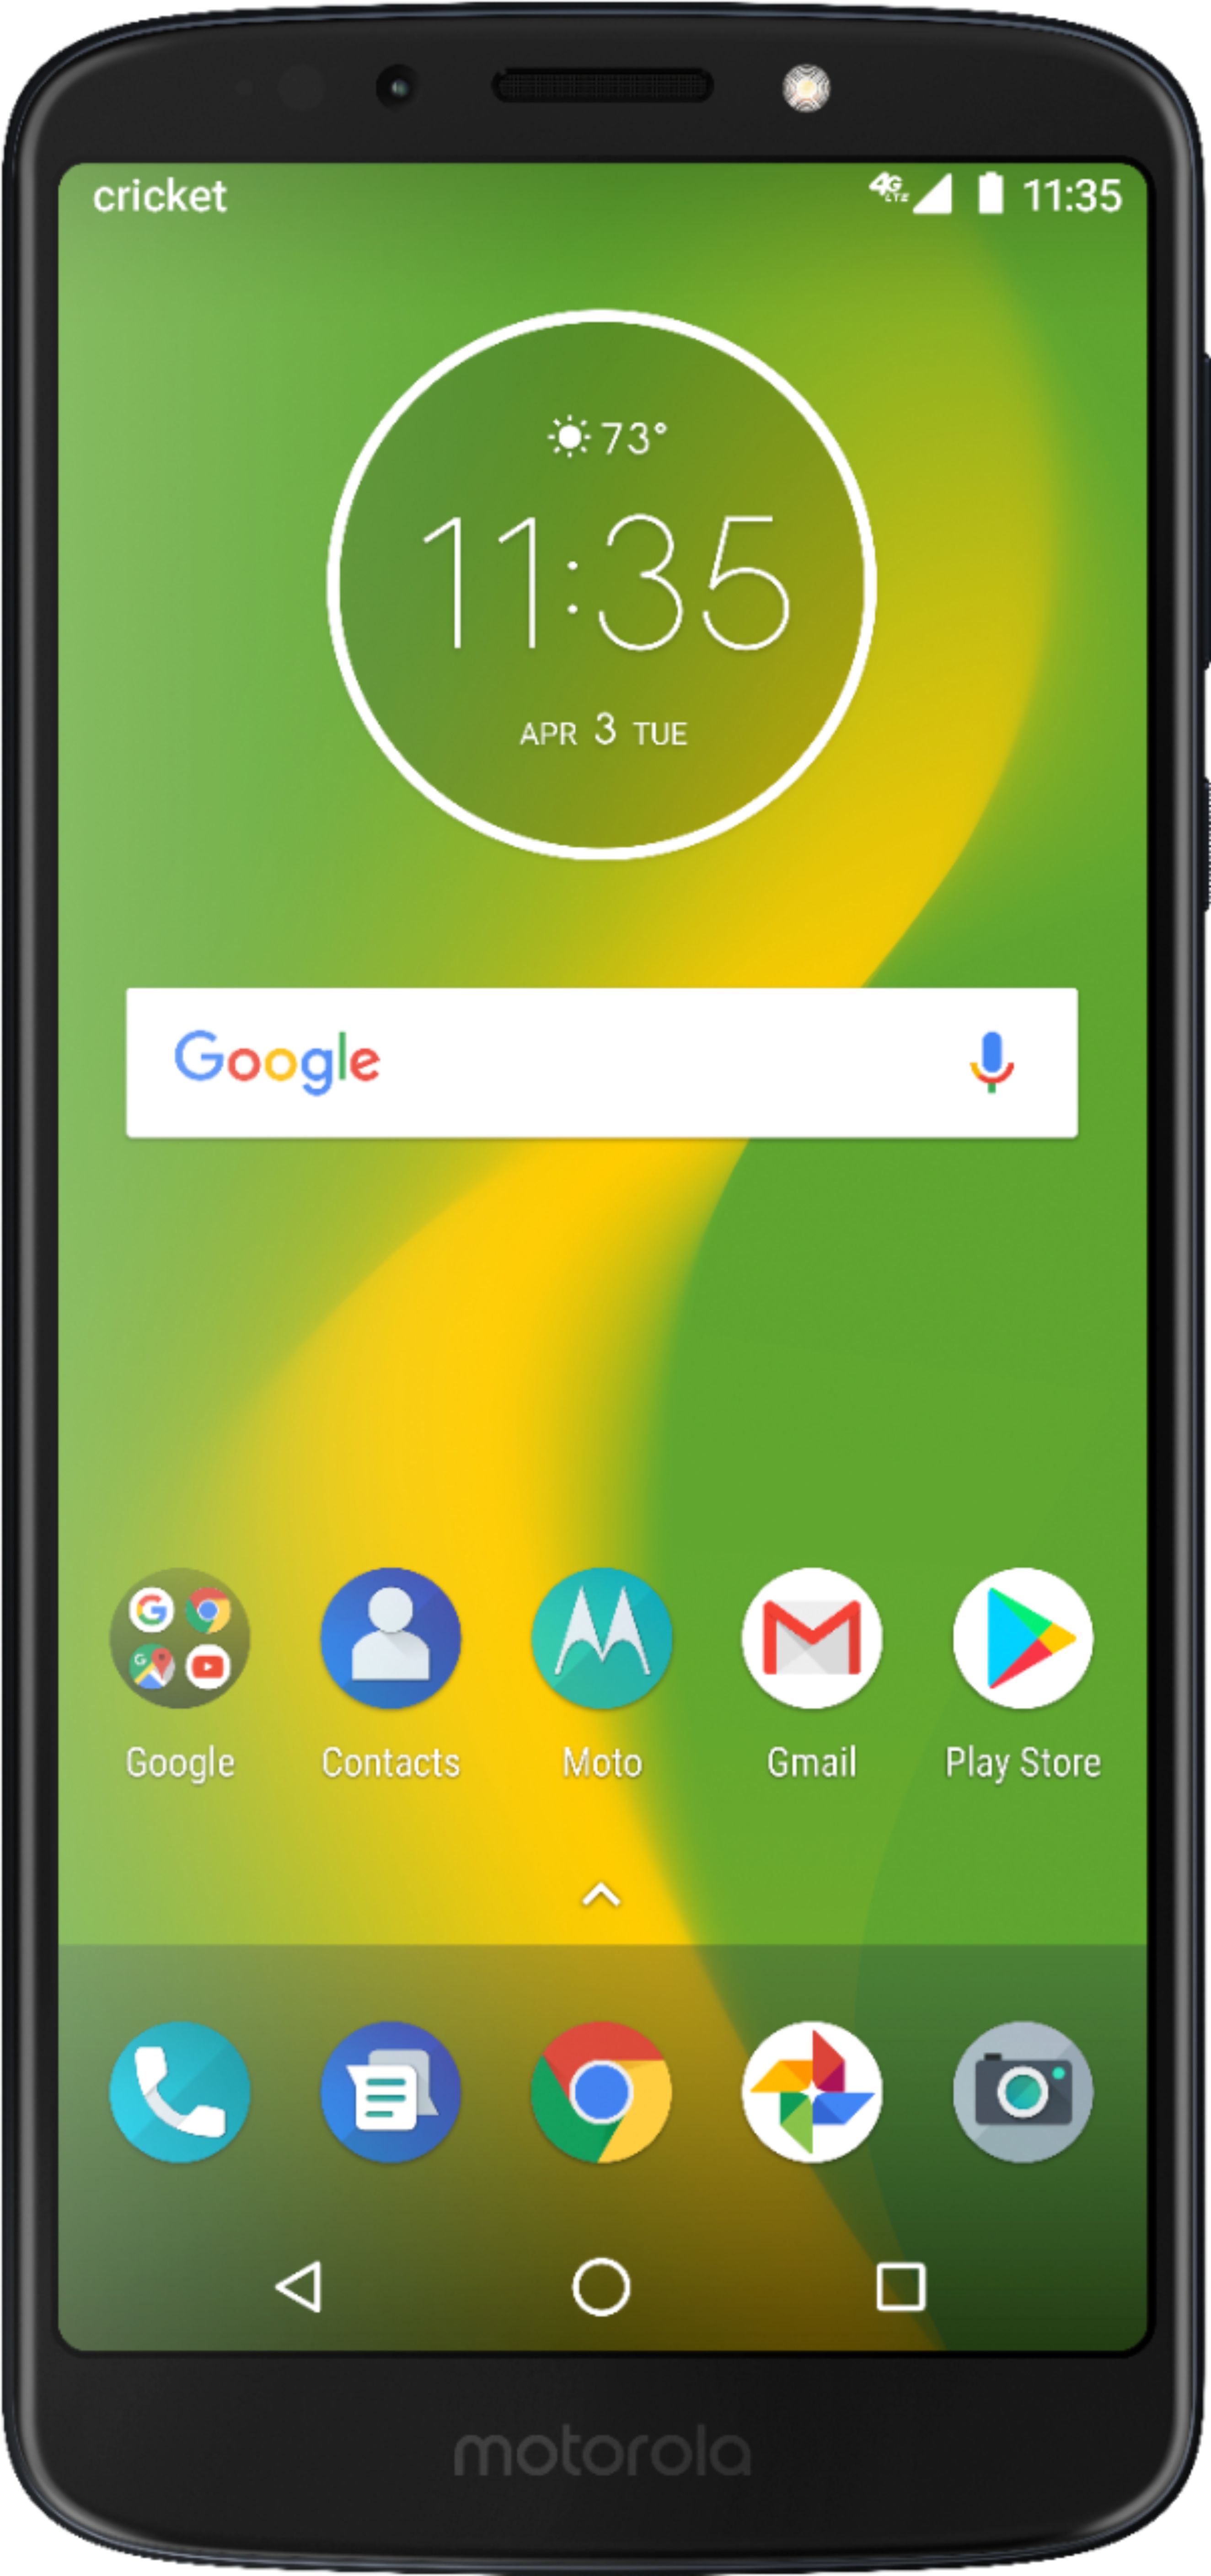 Cricket Wireless Motorola Moto G6 with 16GB Memory